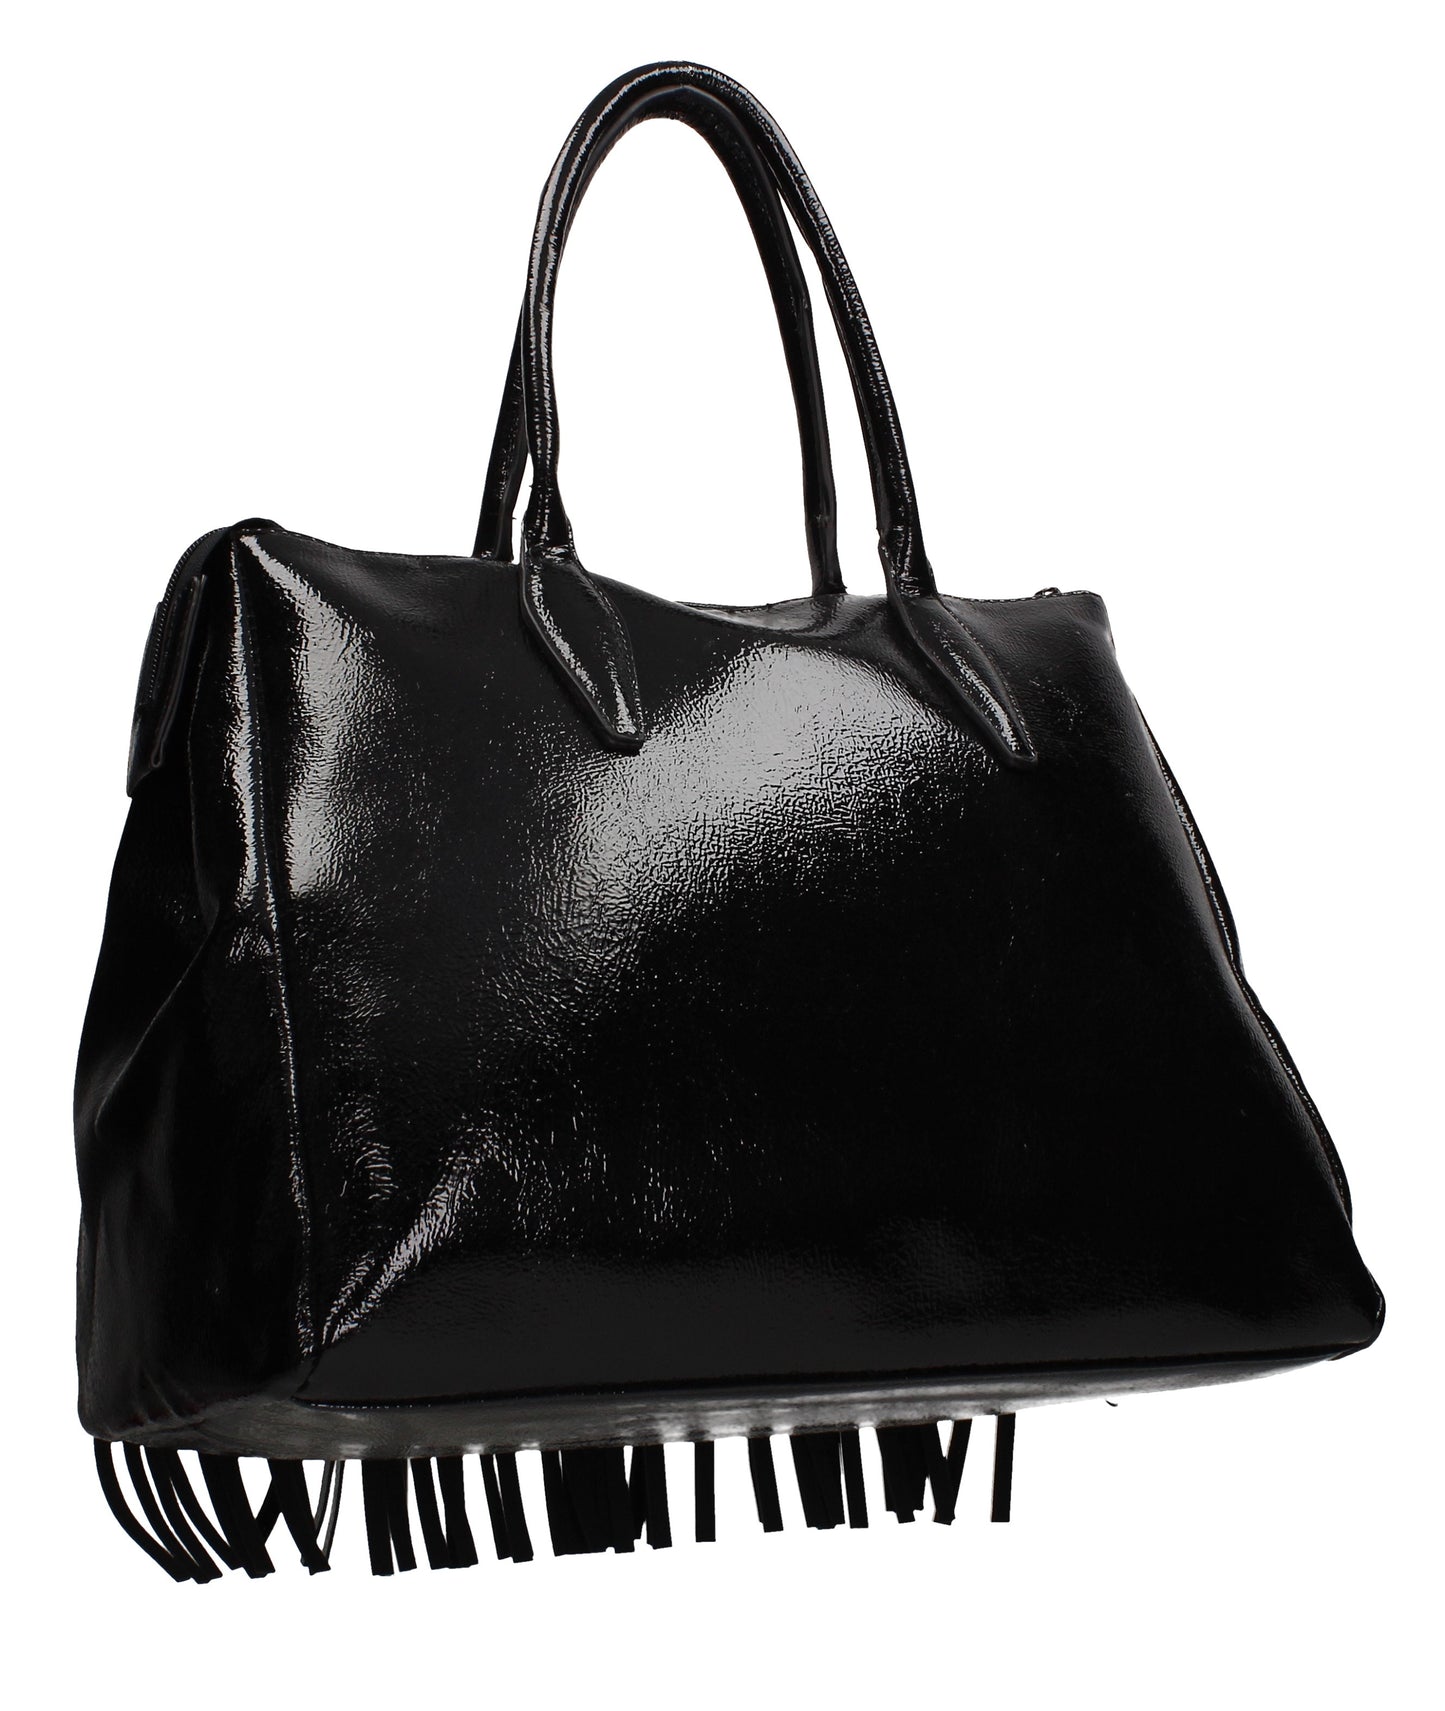 Holly Tassle Handbag Black